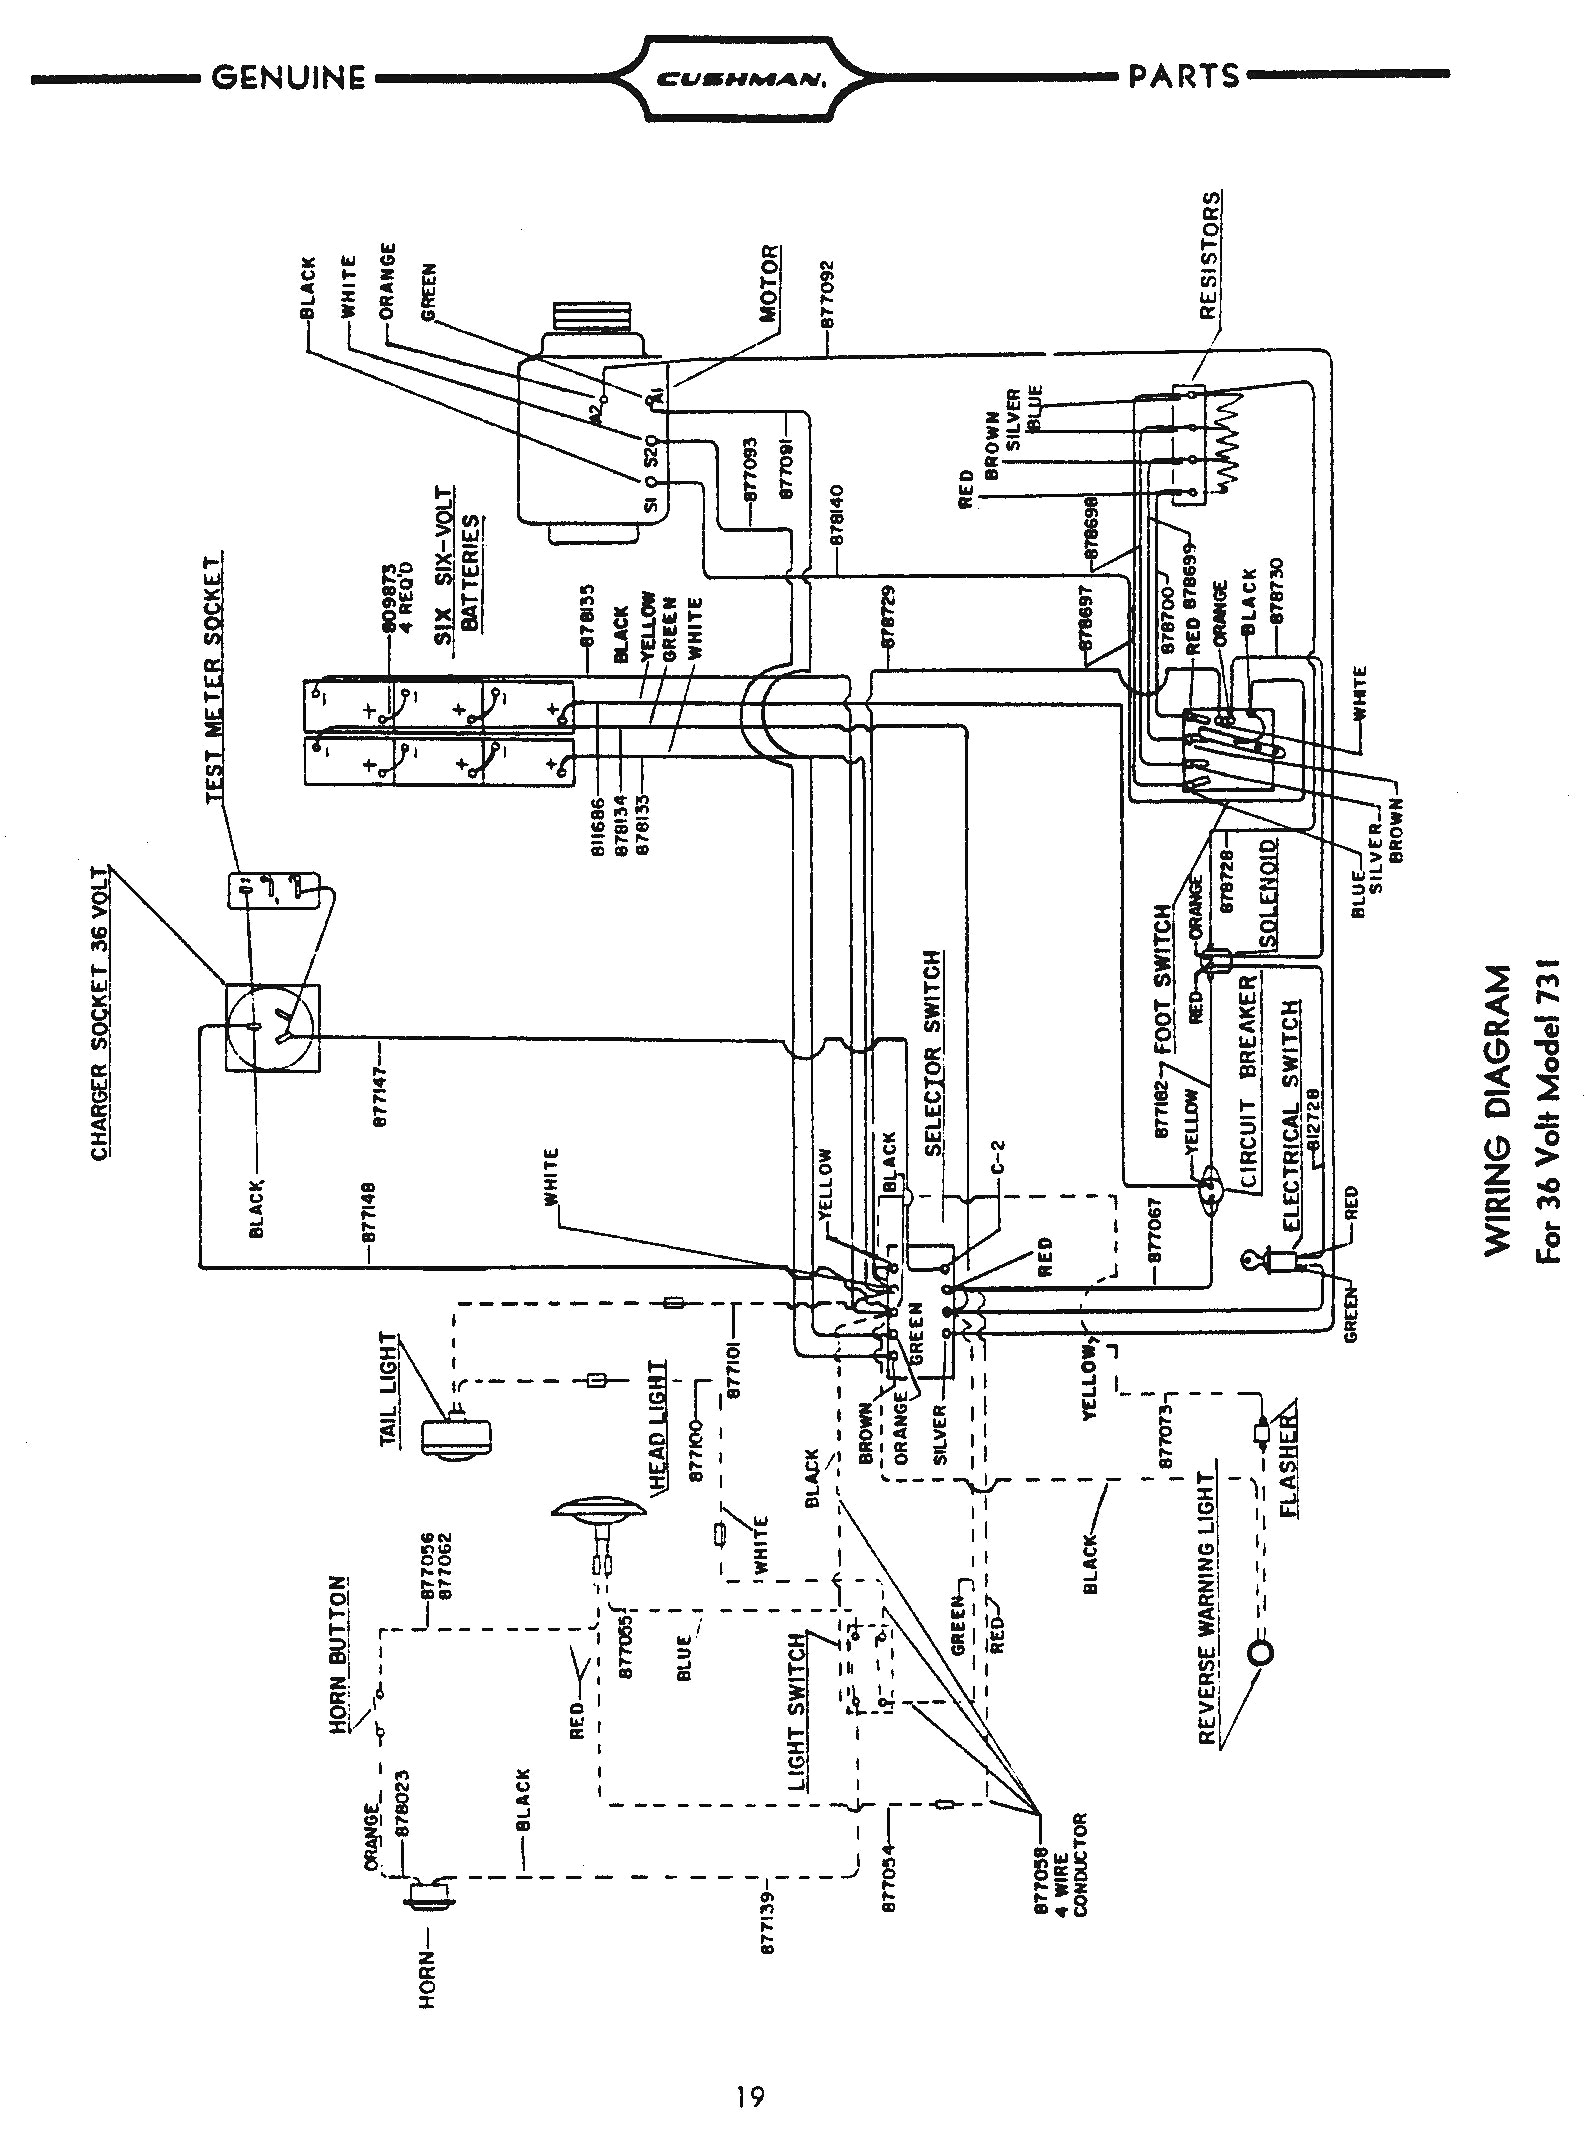 elegant cushman truckster wiring diagram wiring diagram image 36v golf cart wiring diagram cart cushman truckster